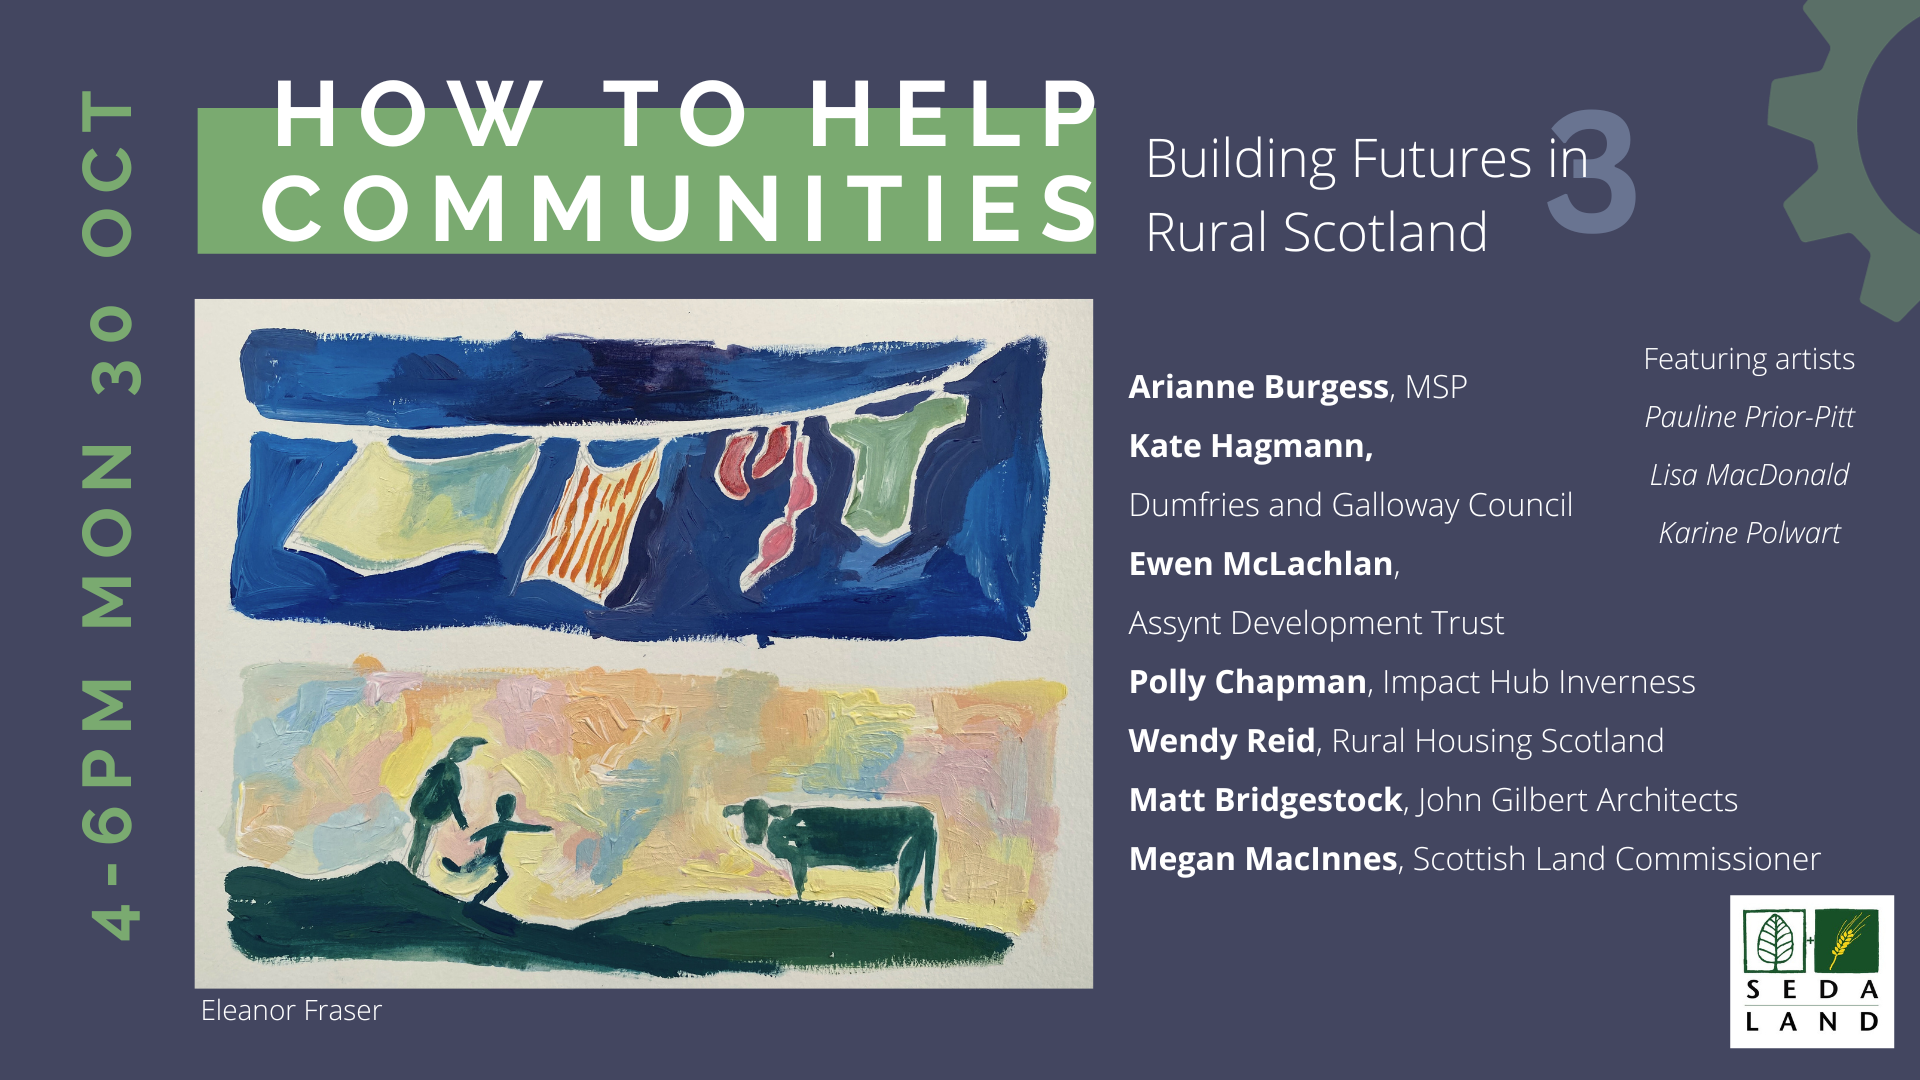 Building Futures 3 - How to Help Communities